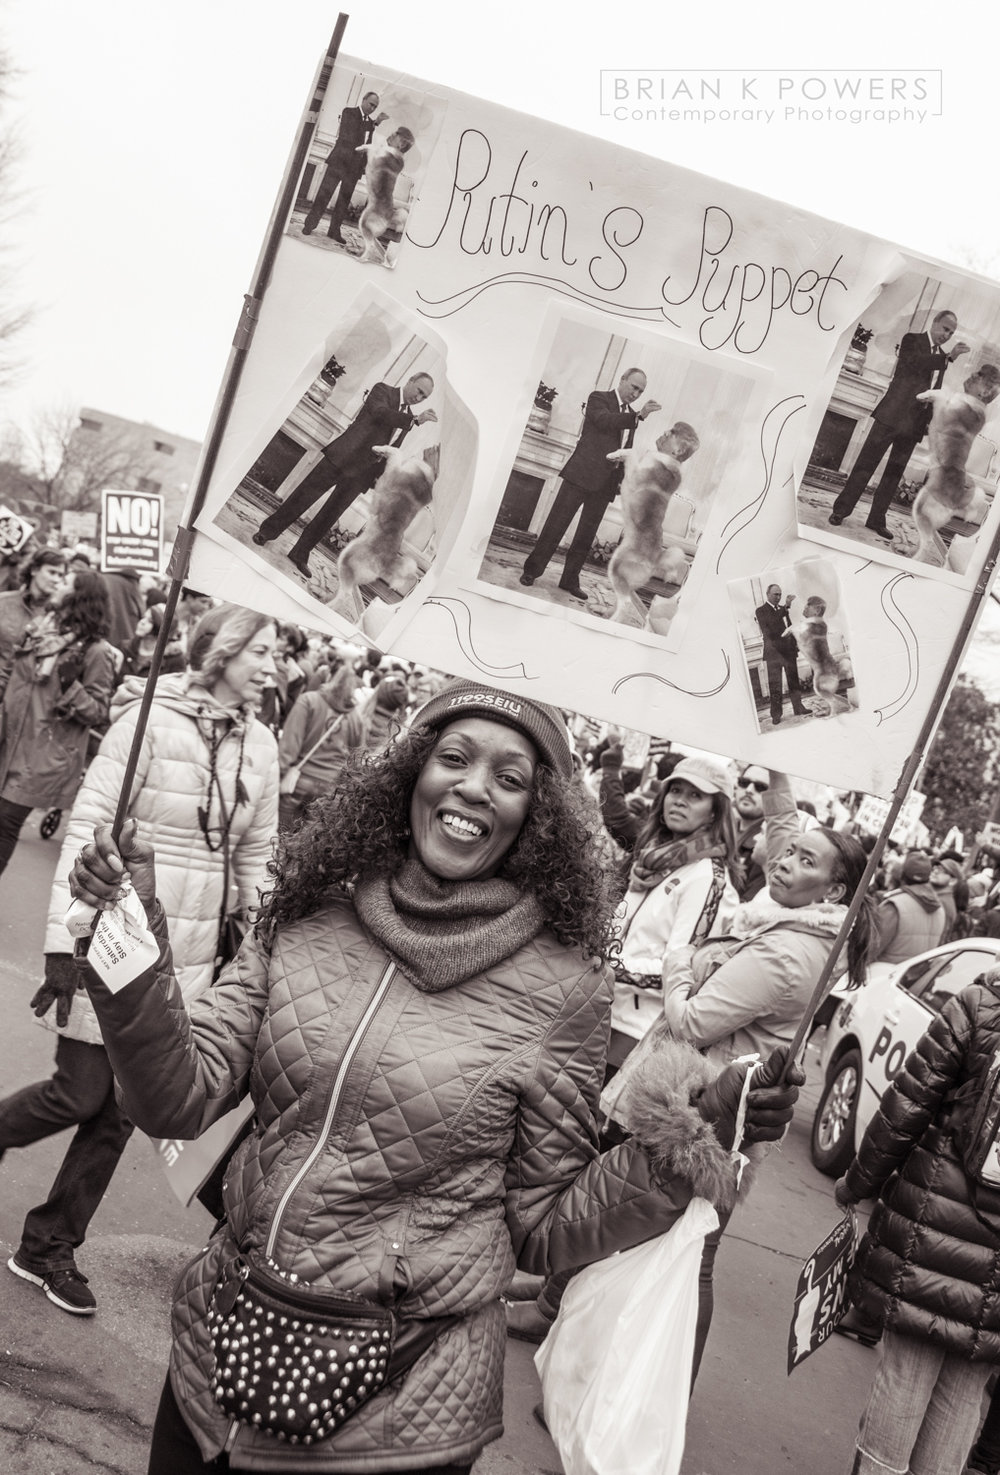 Womens-march-on-washington-2017-Brian-K-Powers-Photography-0116.jpg